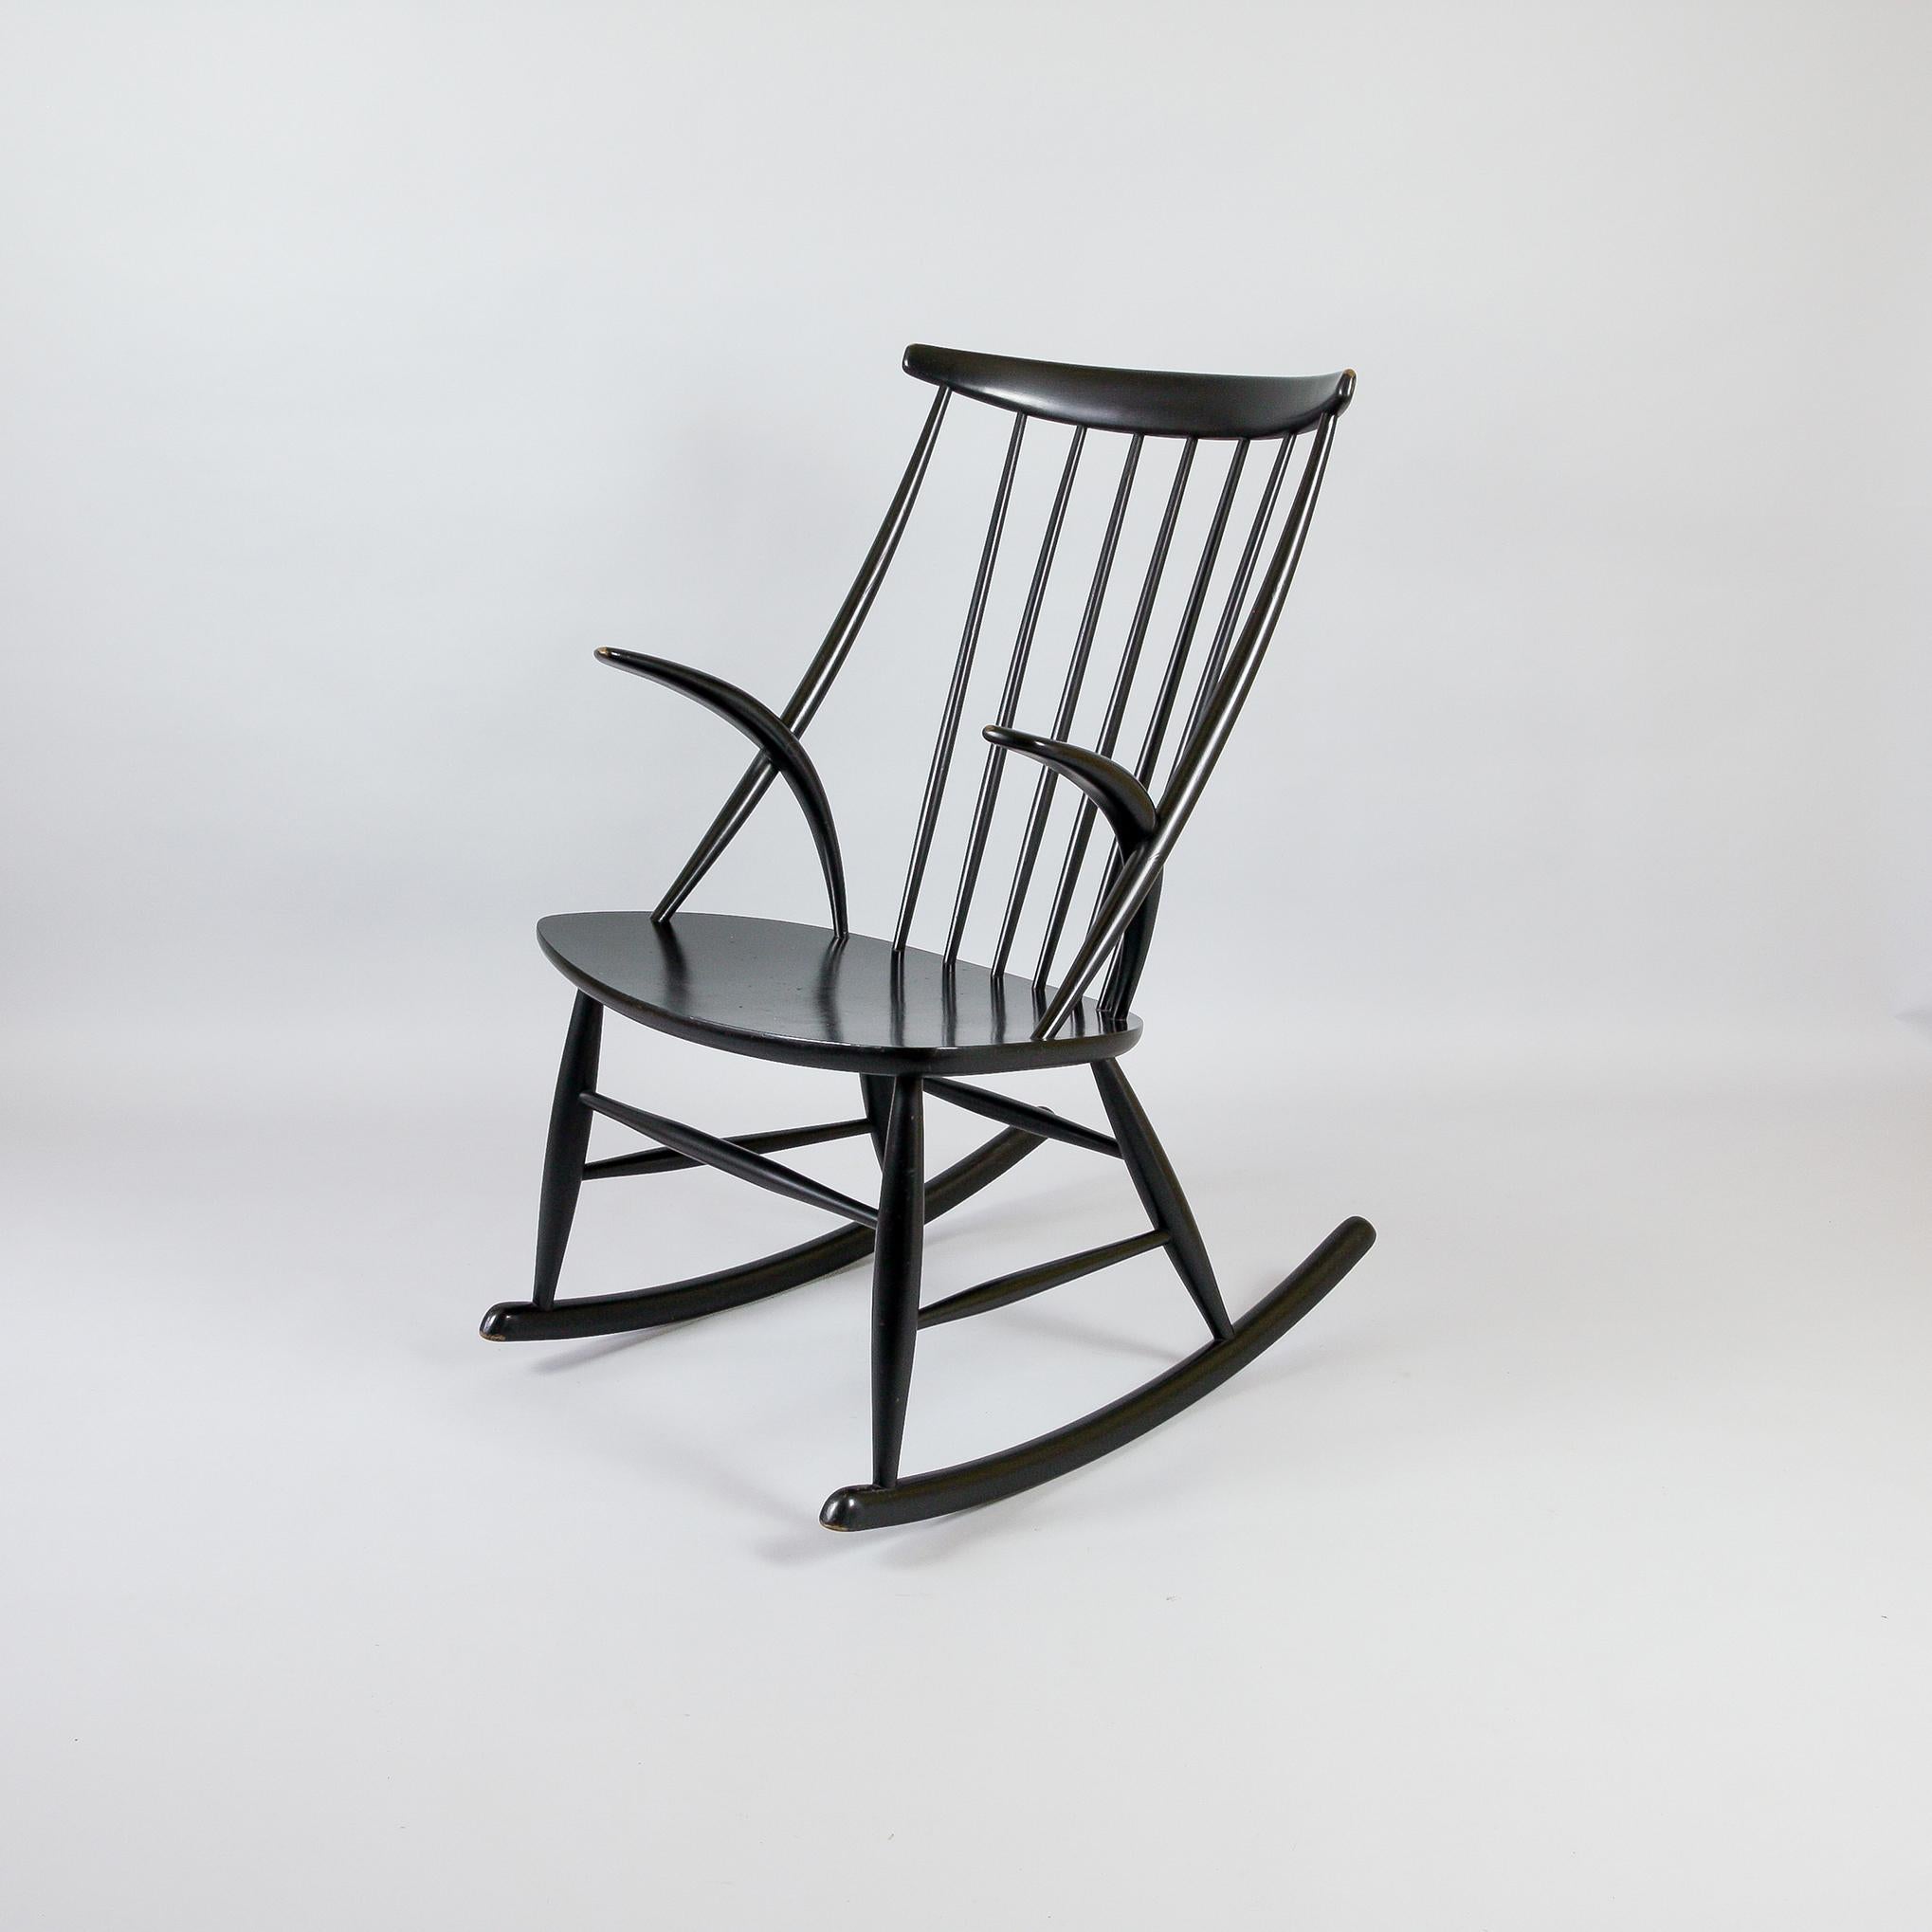 Danish Illum Wikkelso Gyngestol No. 3 Rocking Chair by Niels Eilerson